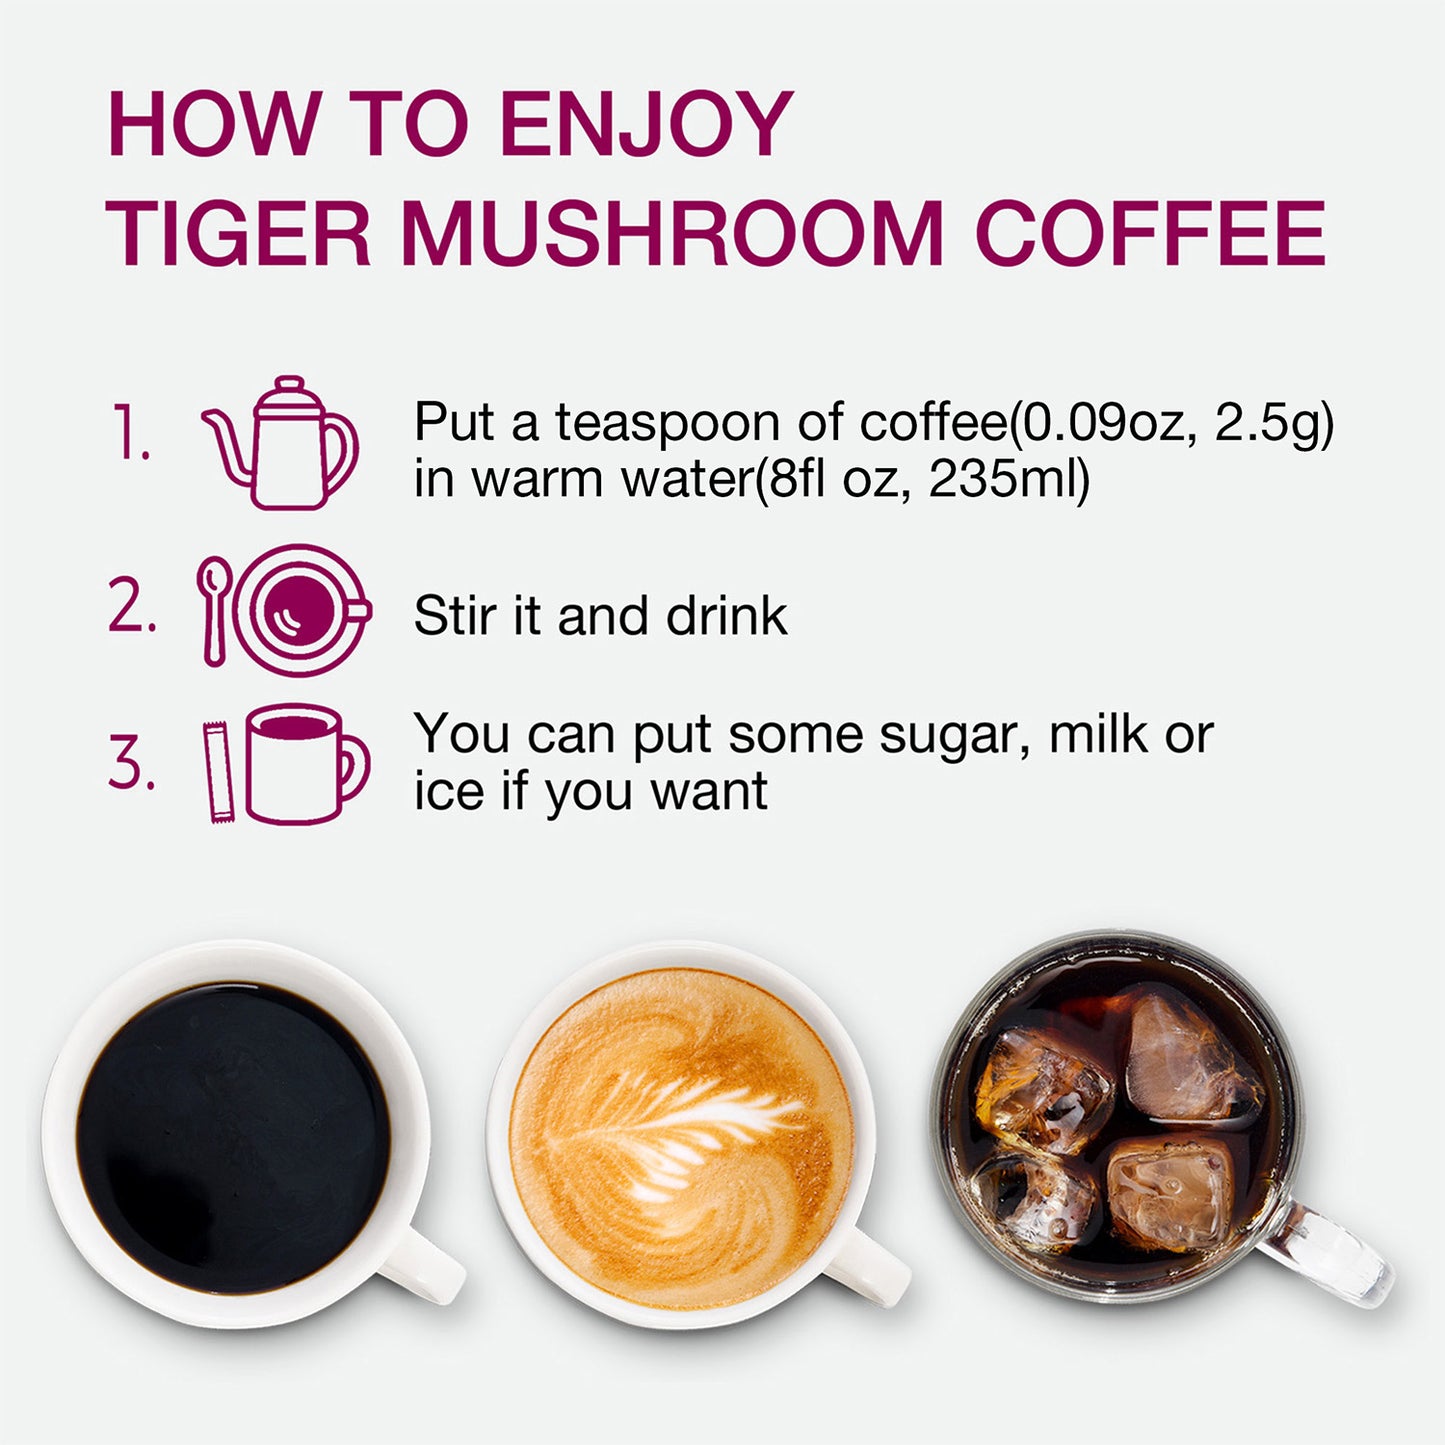 Tiger 2 Mushroom Coffee